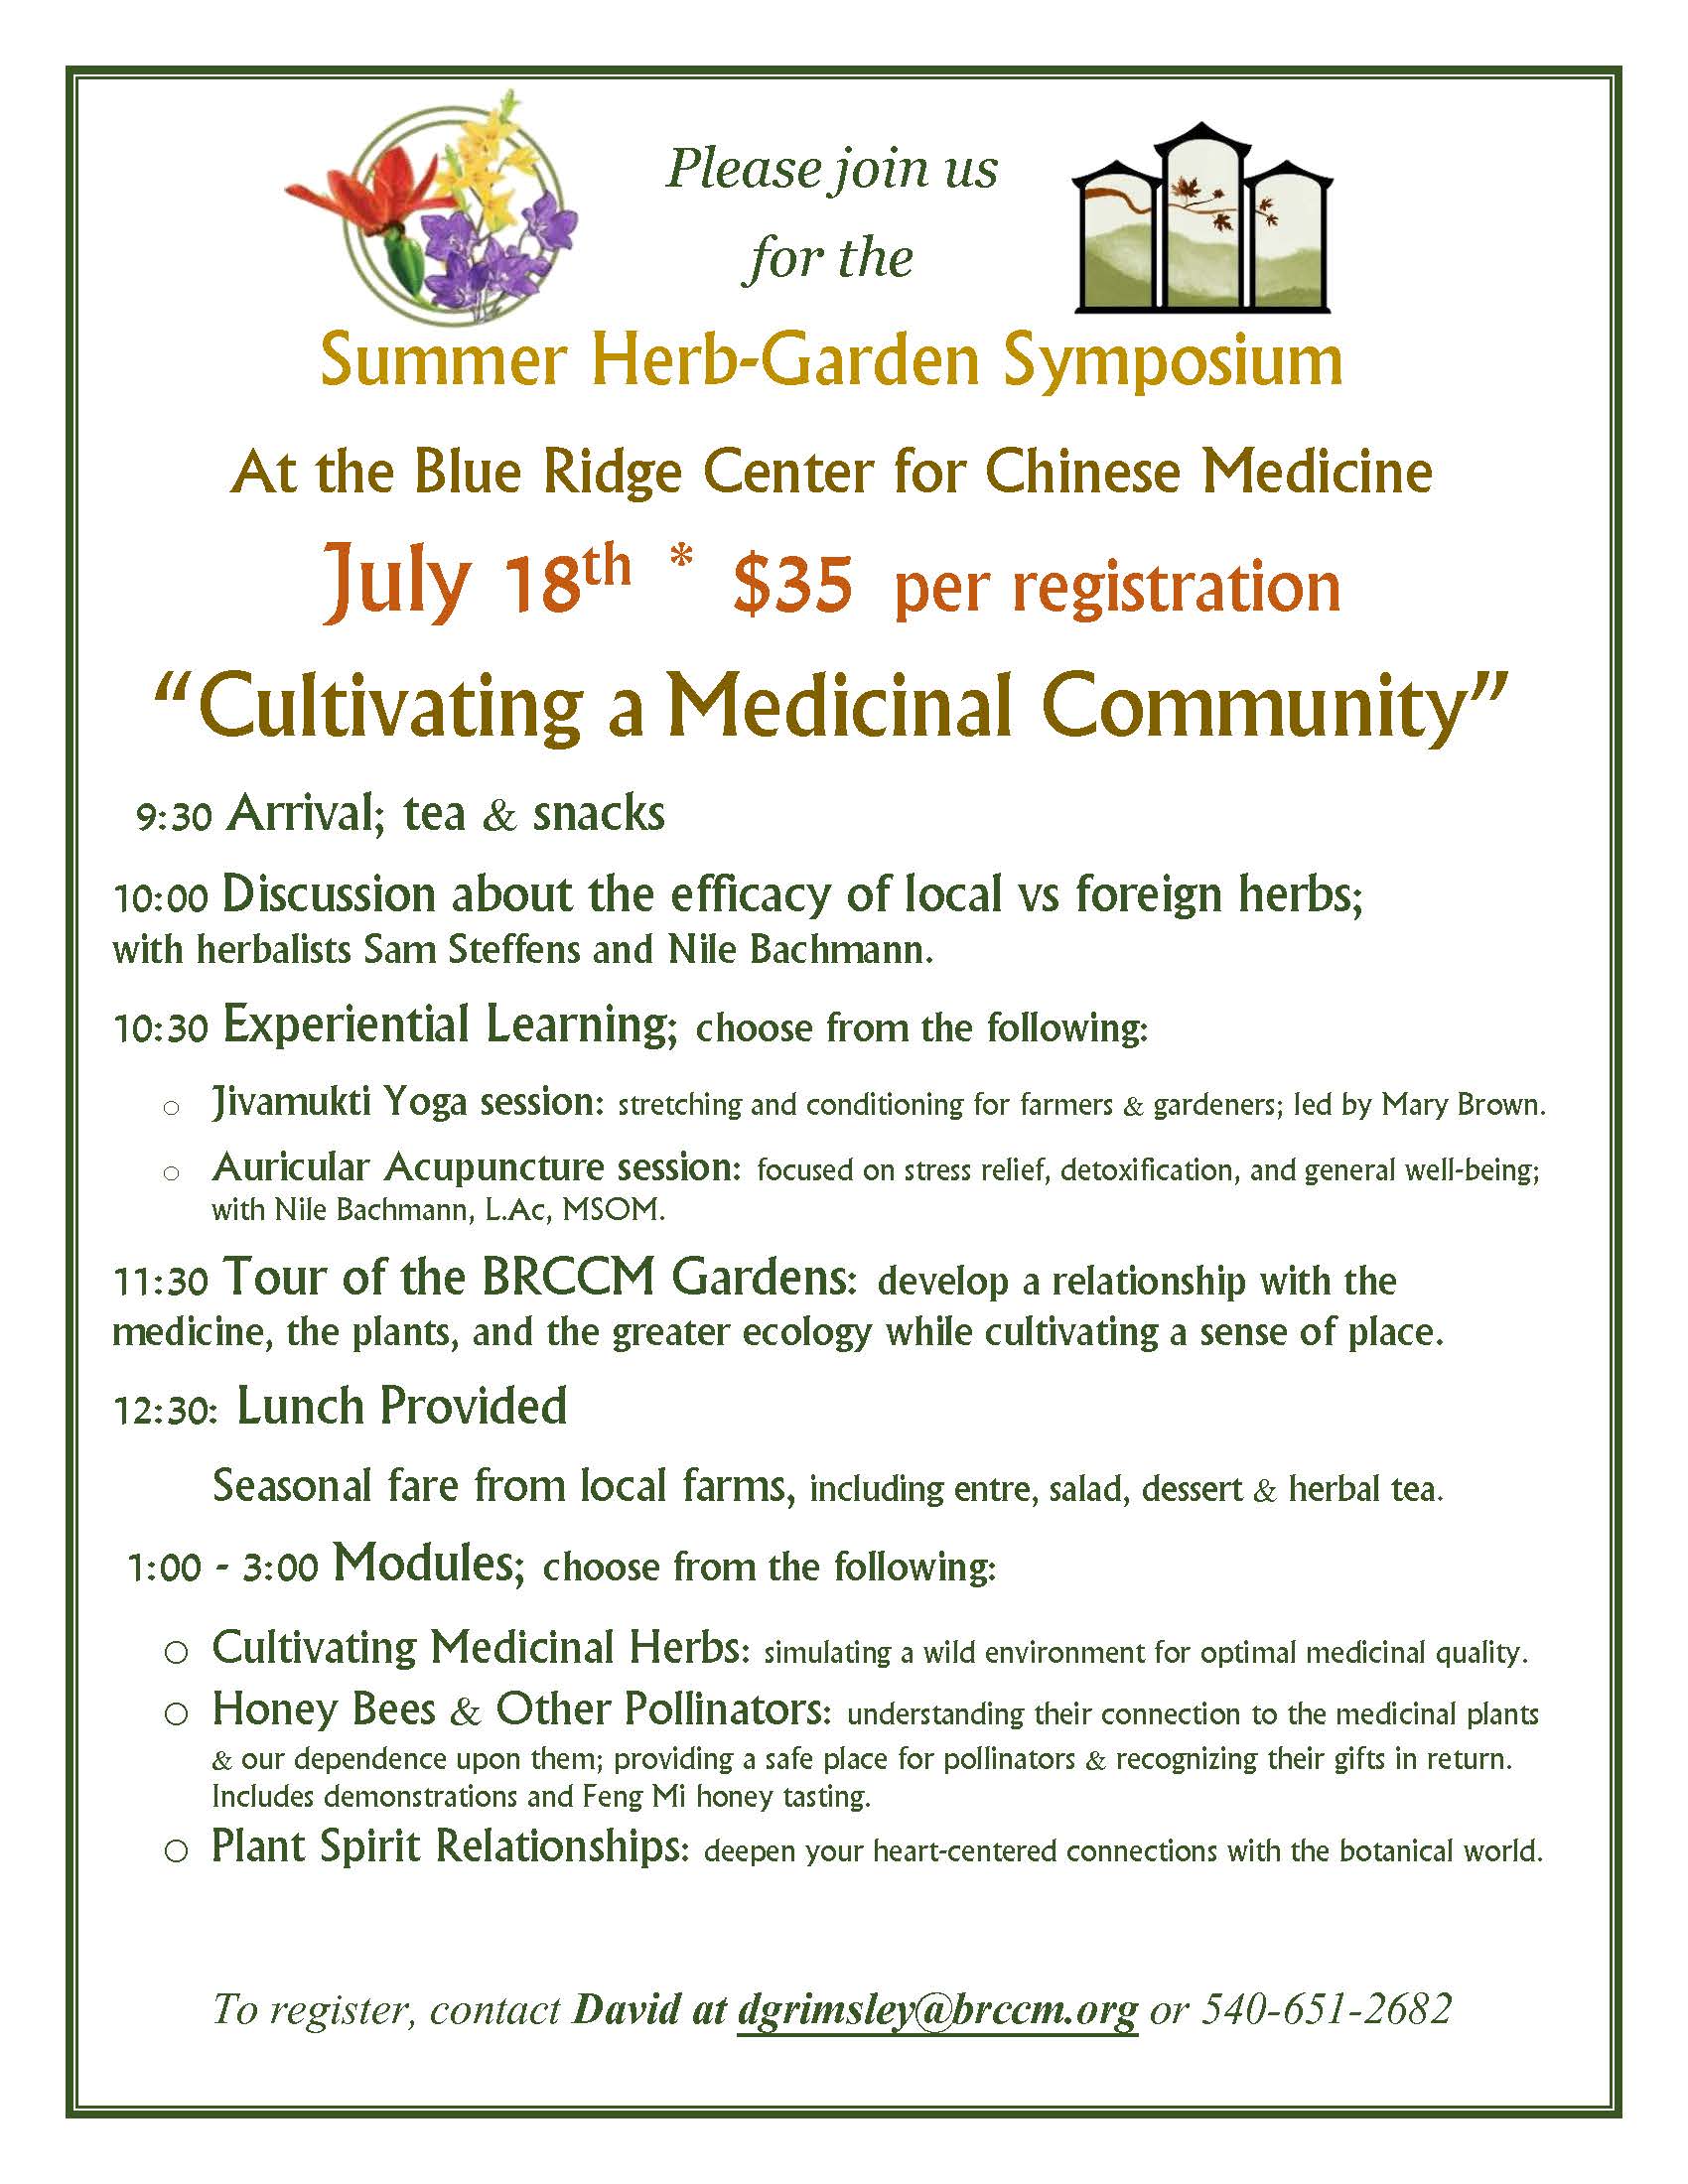 Brccm event July 18 2015